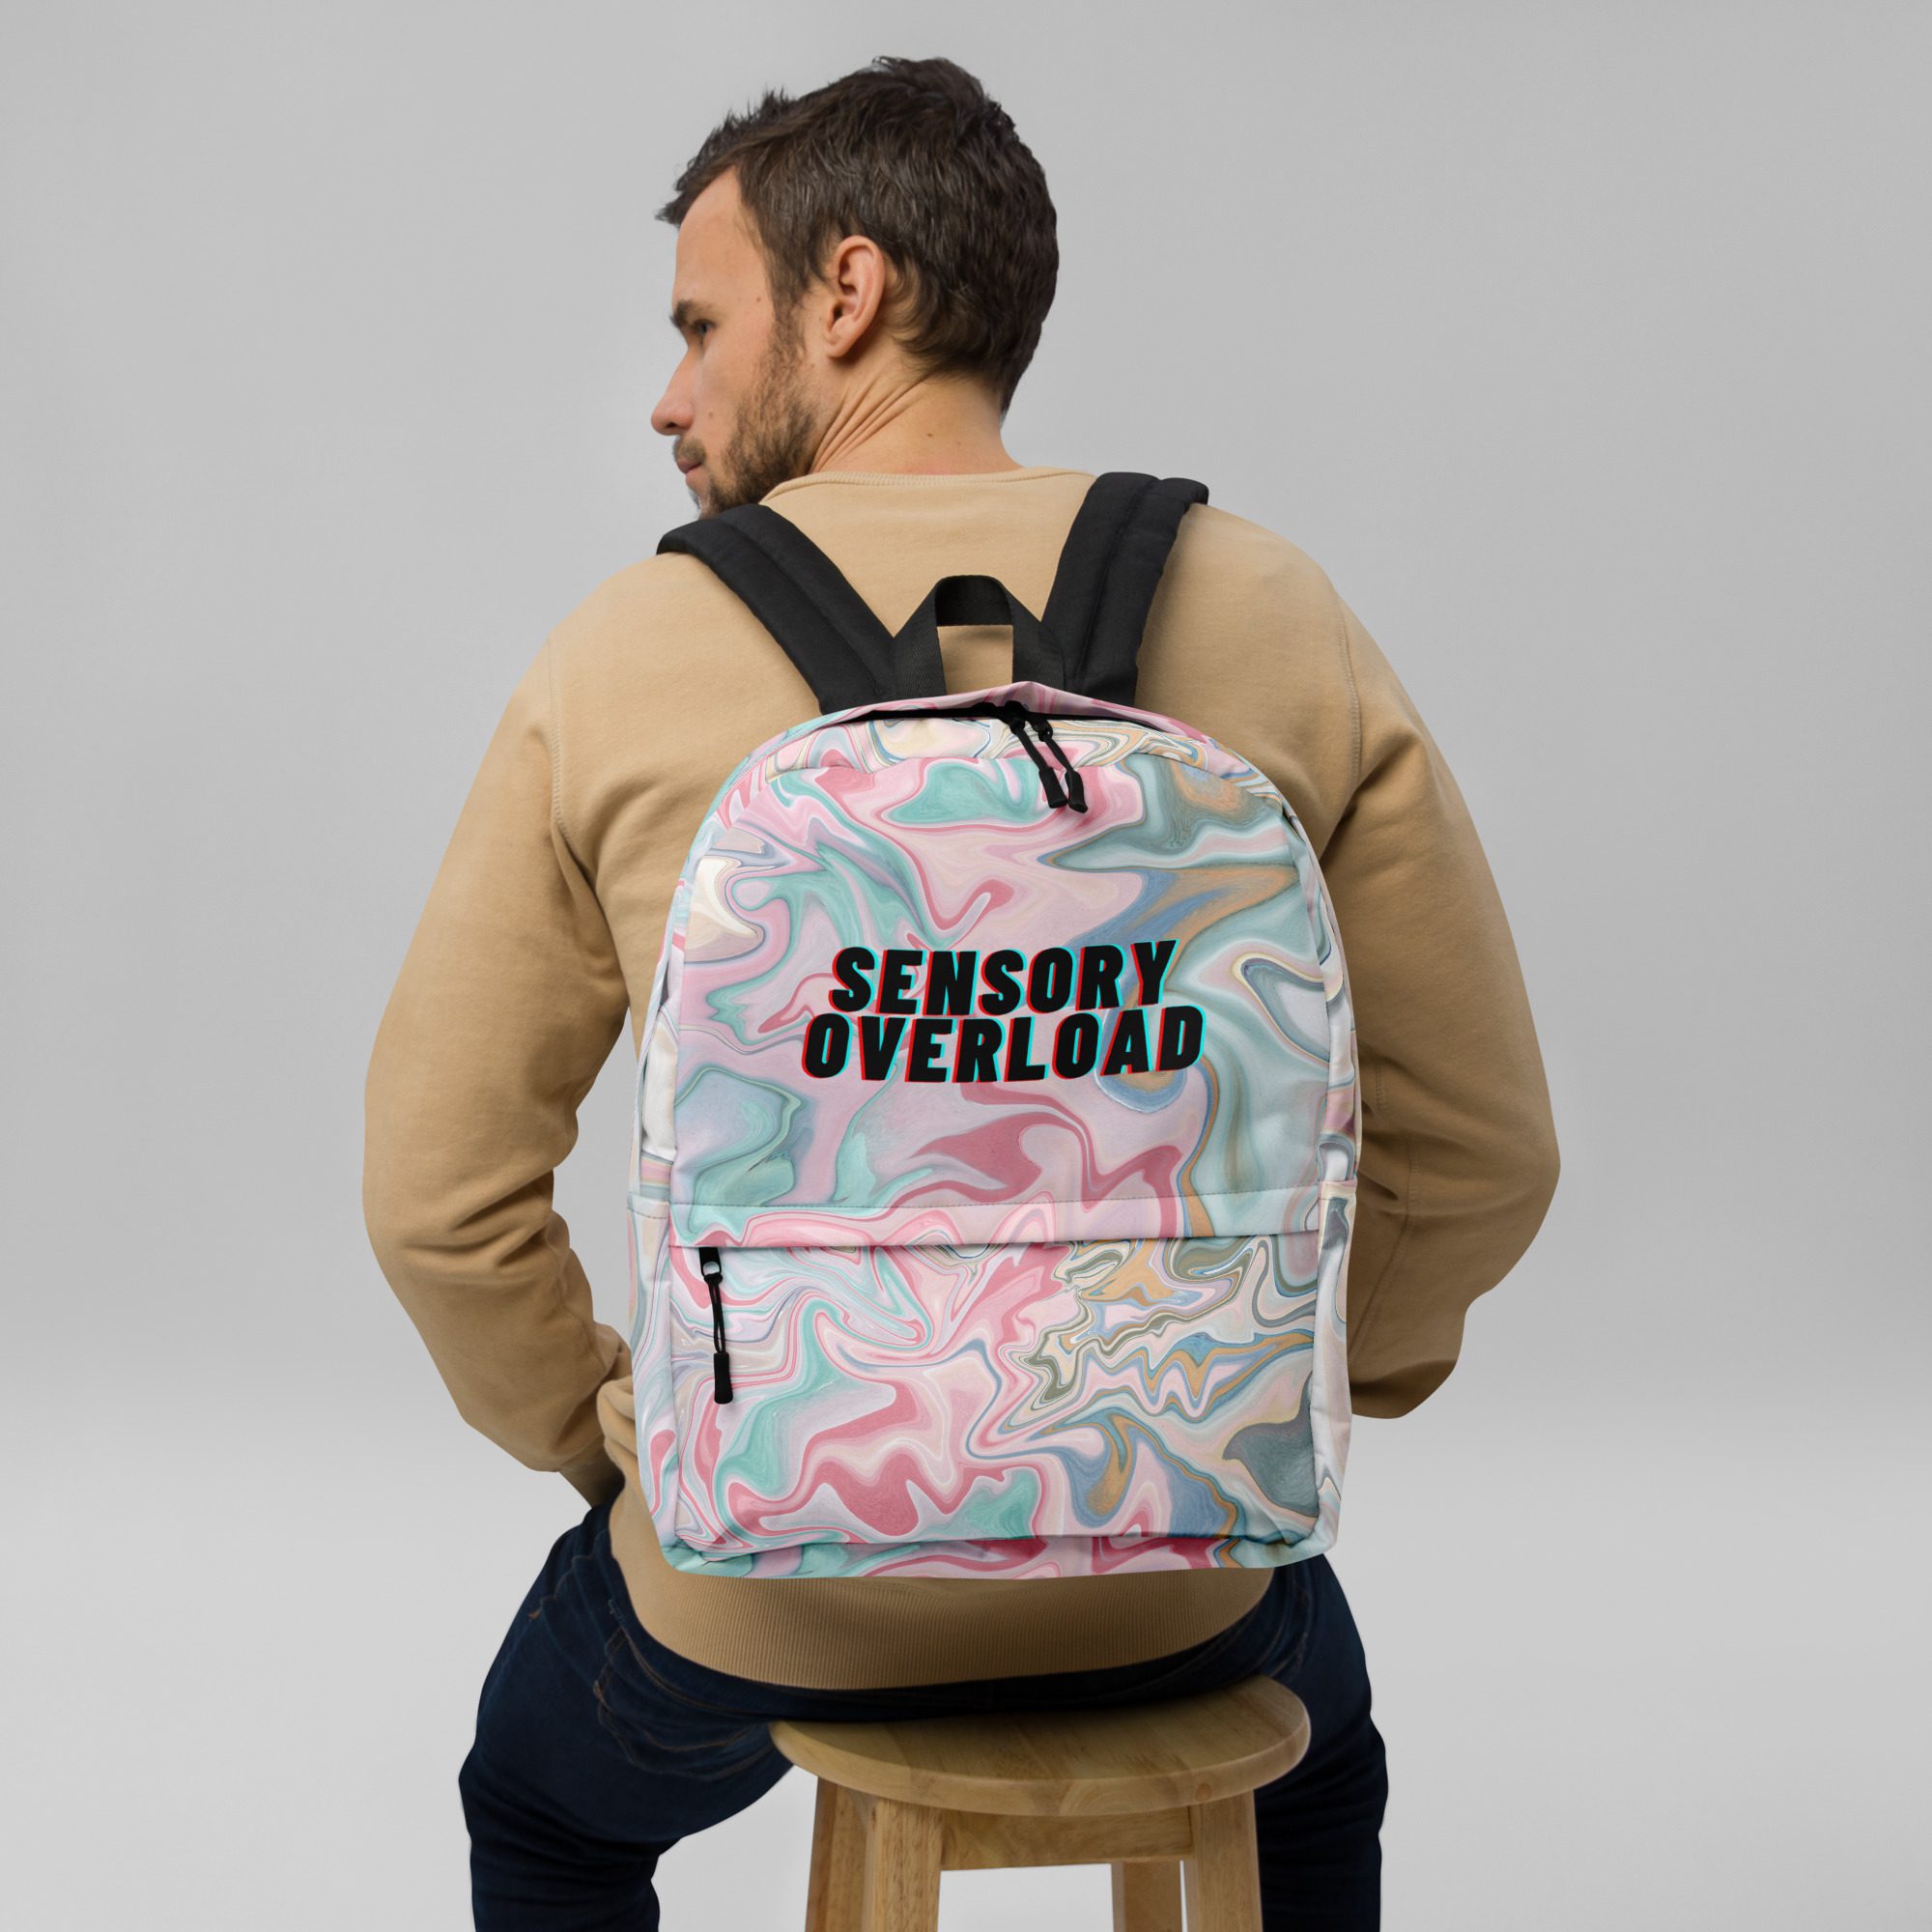 SENSORY OVERLOAD Backpack